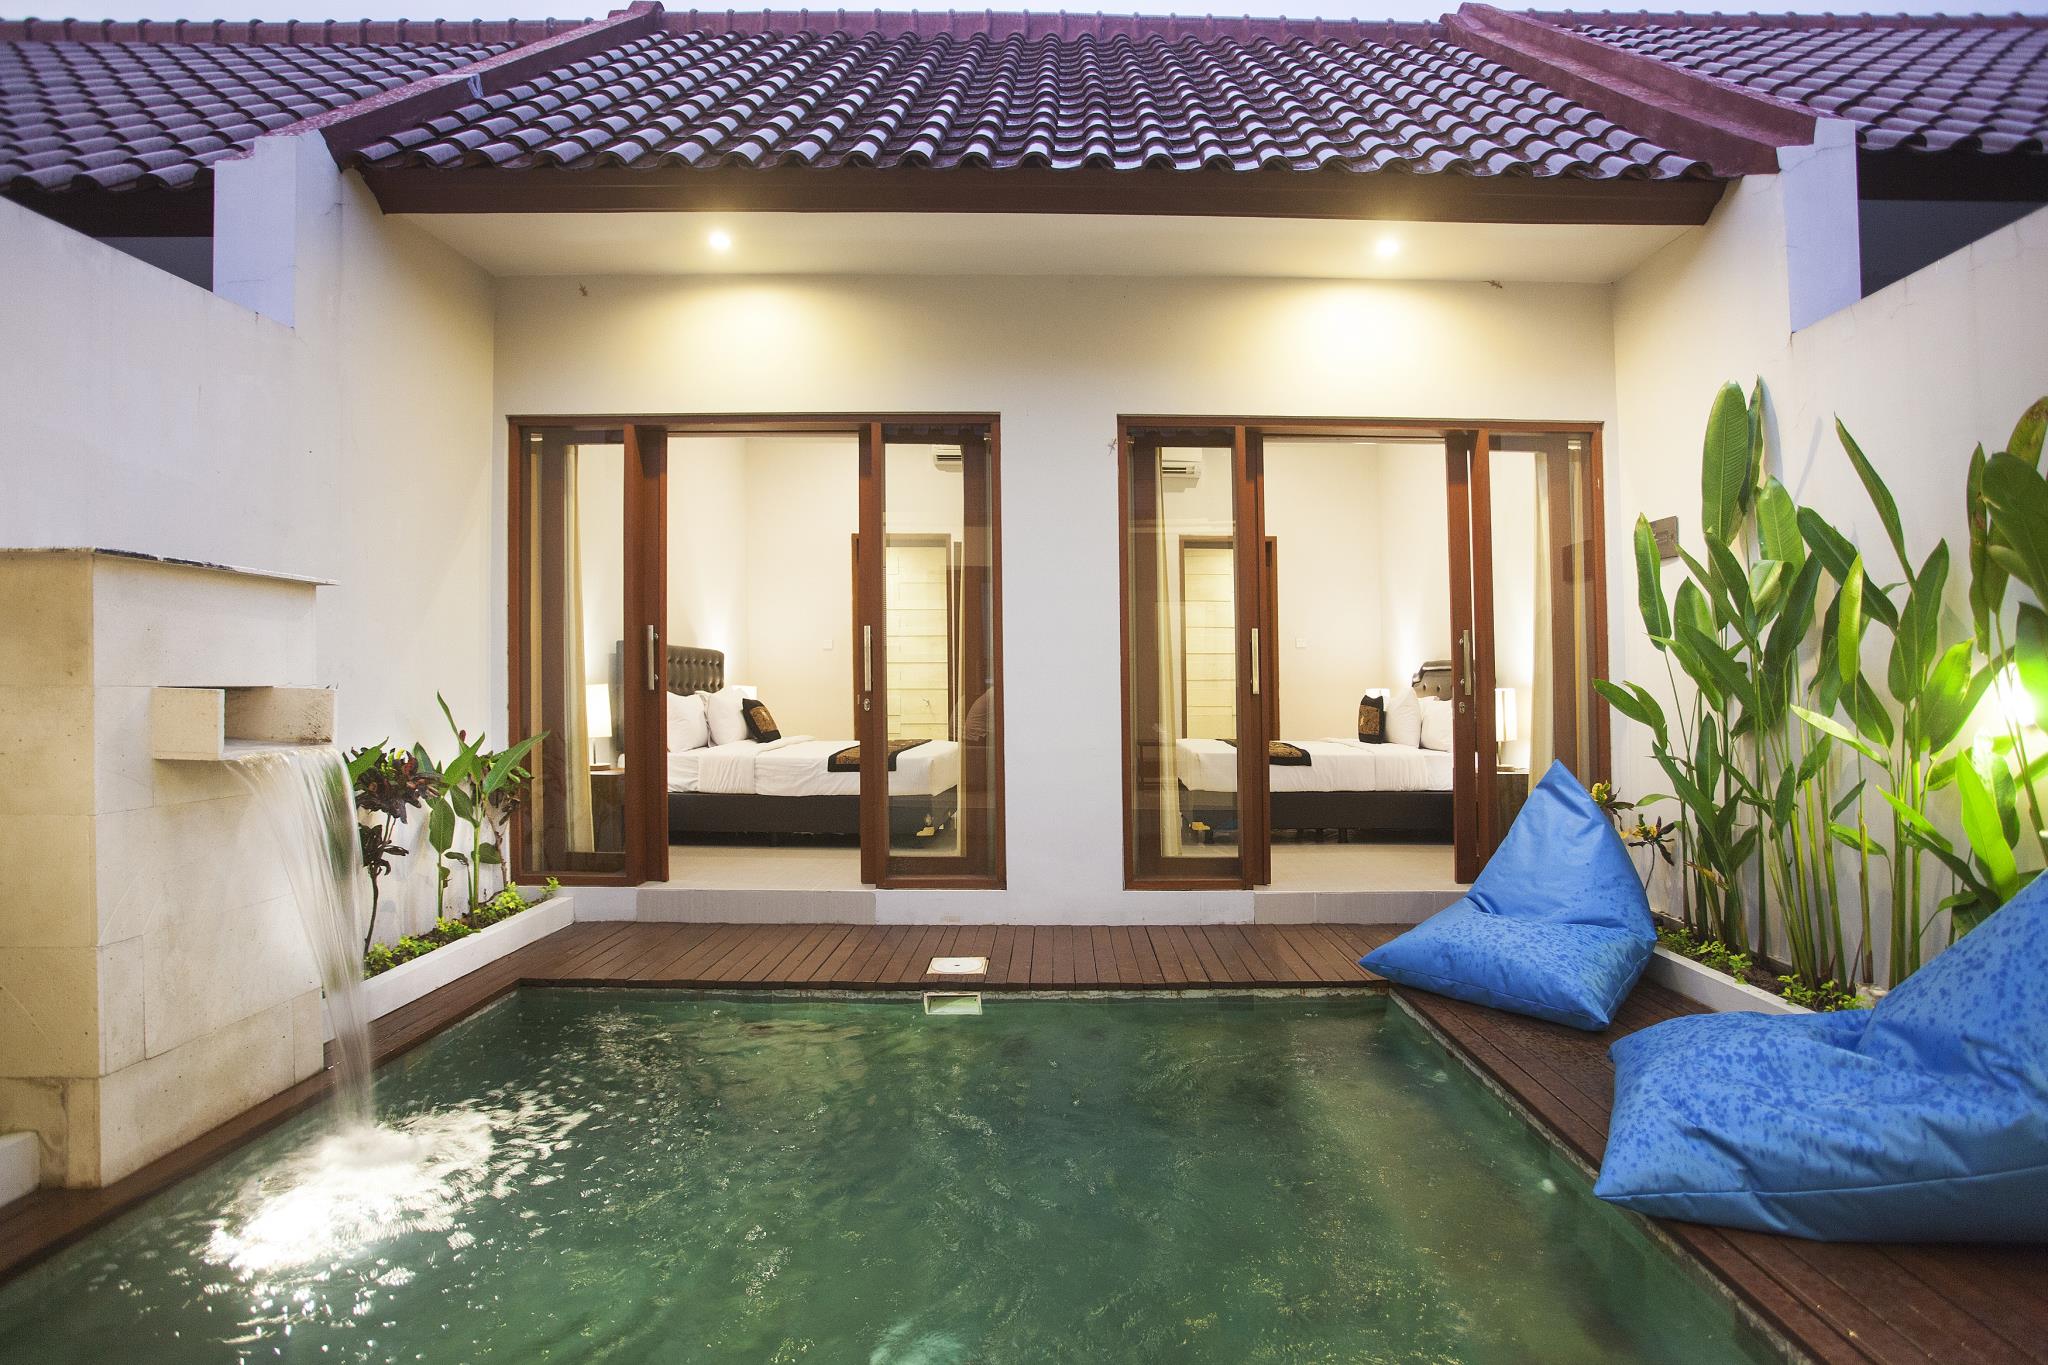 75 Populer Desain Kamar Mandi Villa Bali Paling Terkenal